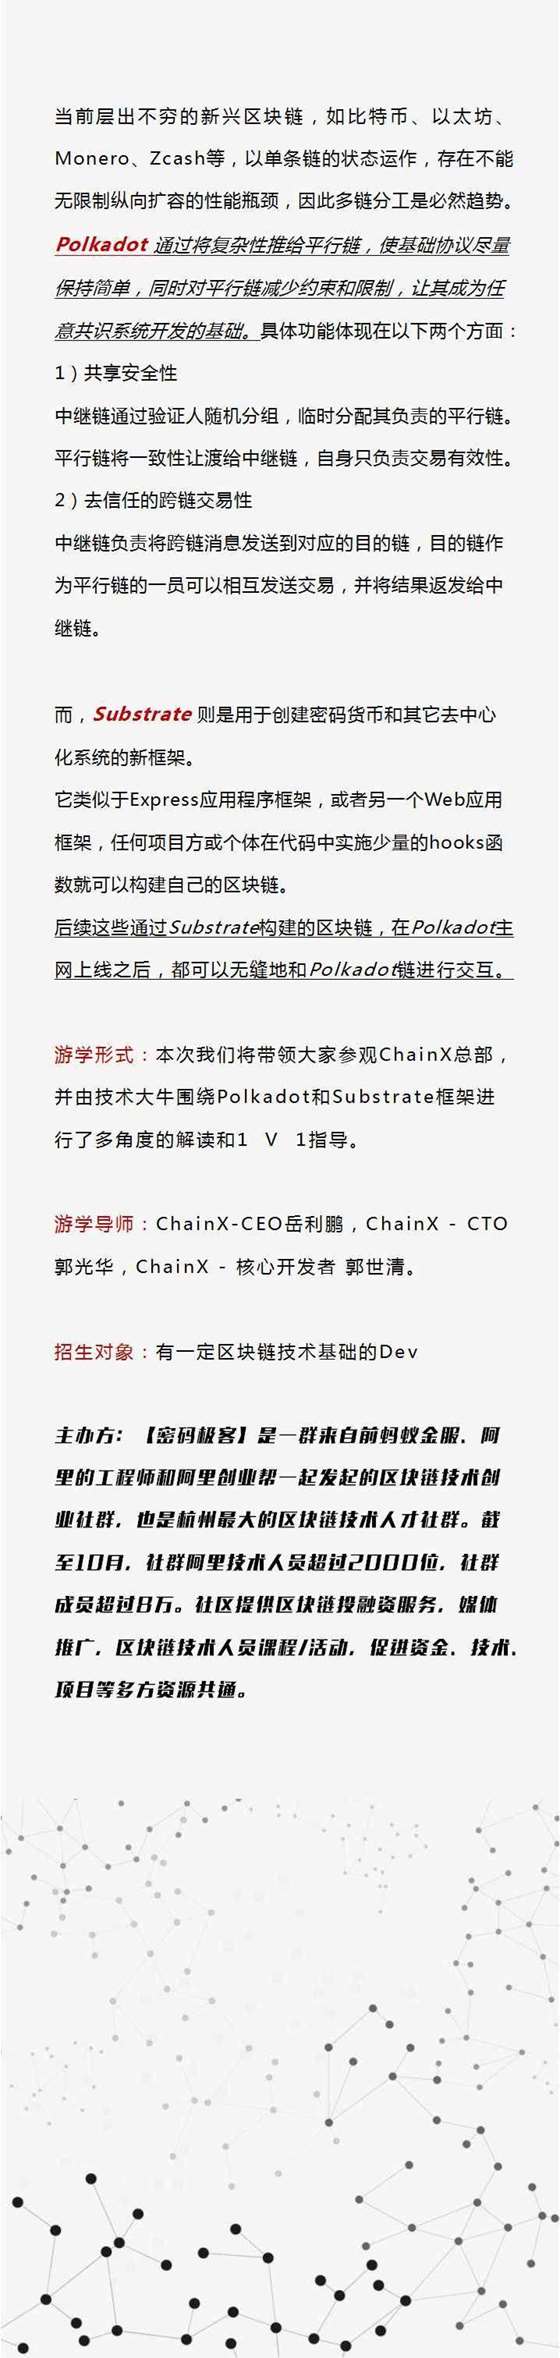 chainX游学version2.jpg